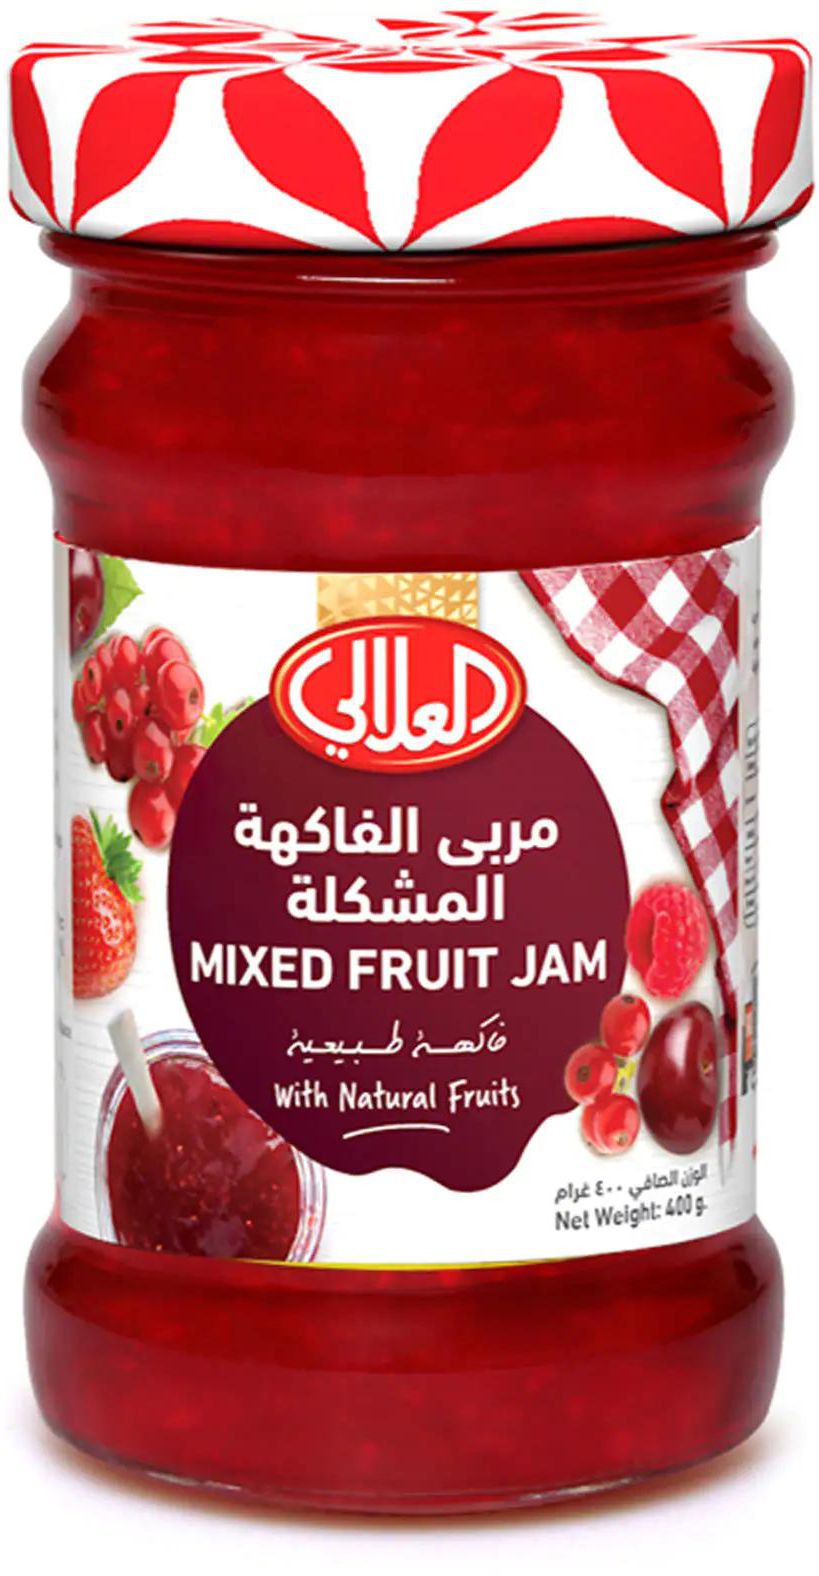 Al alali mix fruit jam 400 g